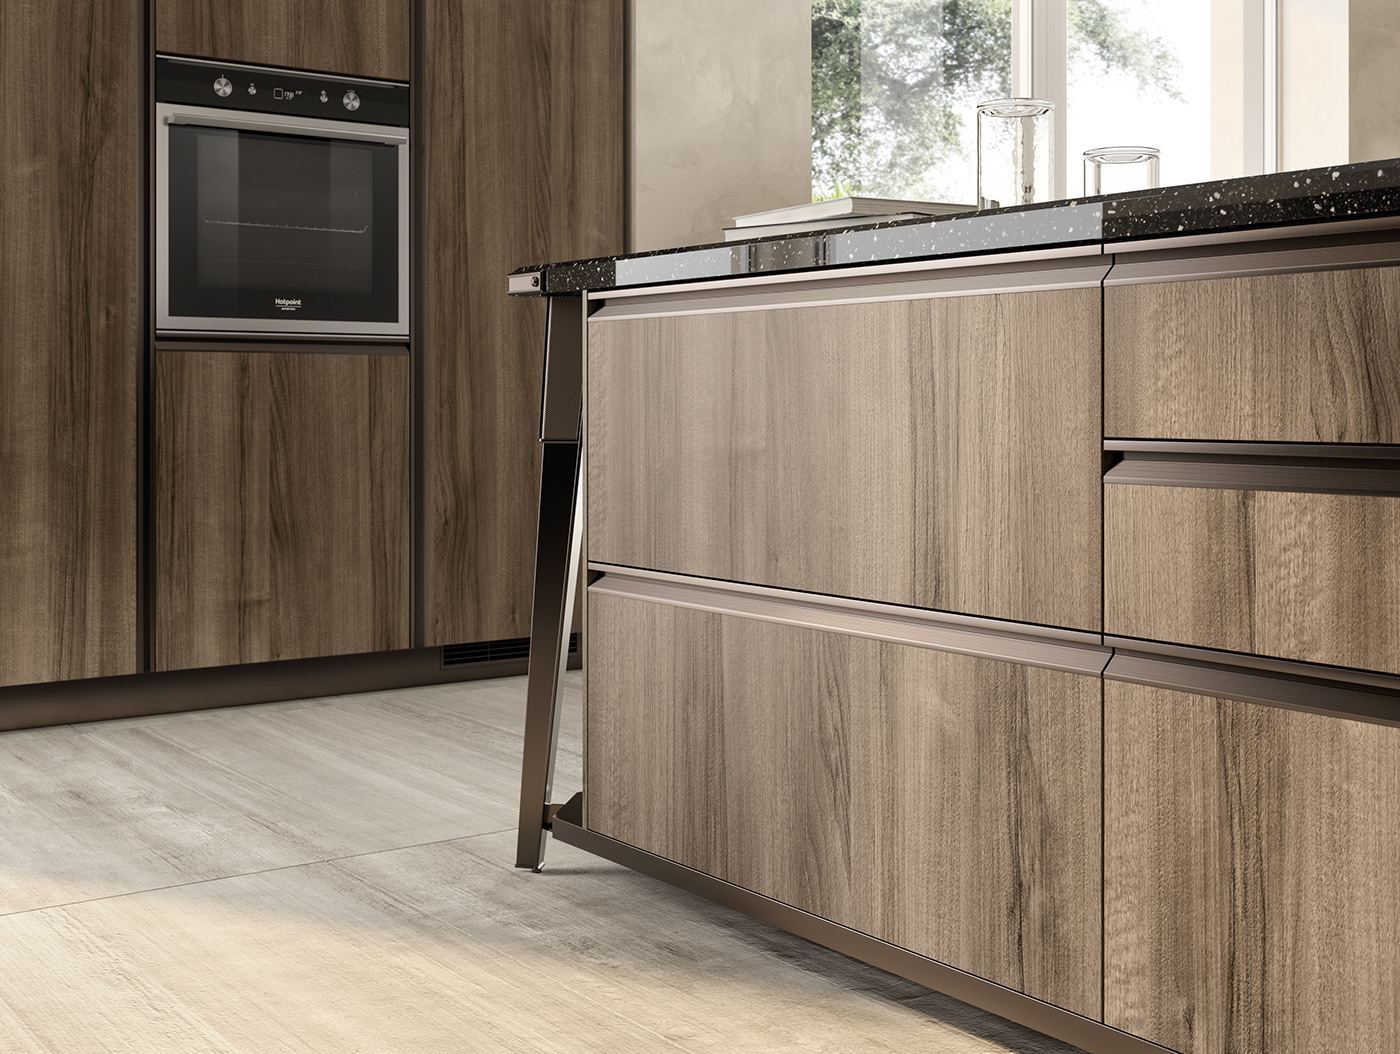 Behance design Diesel industrial Interior kitchen maverickrender new 2020 rendering studio podrini